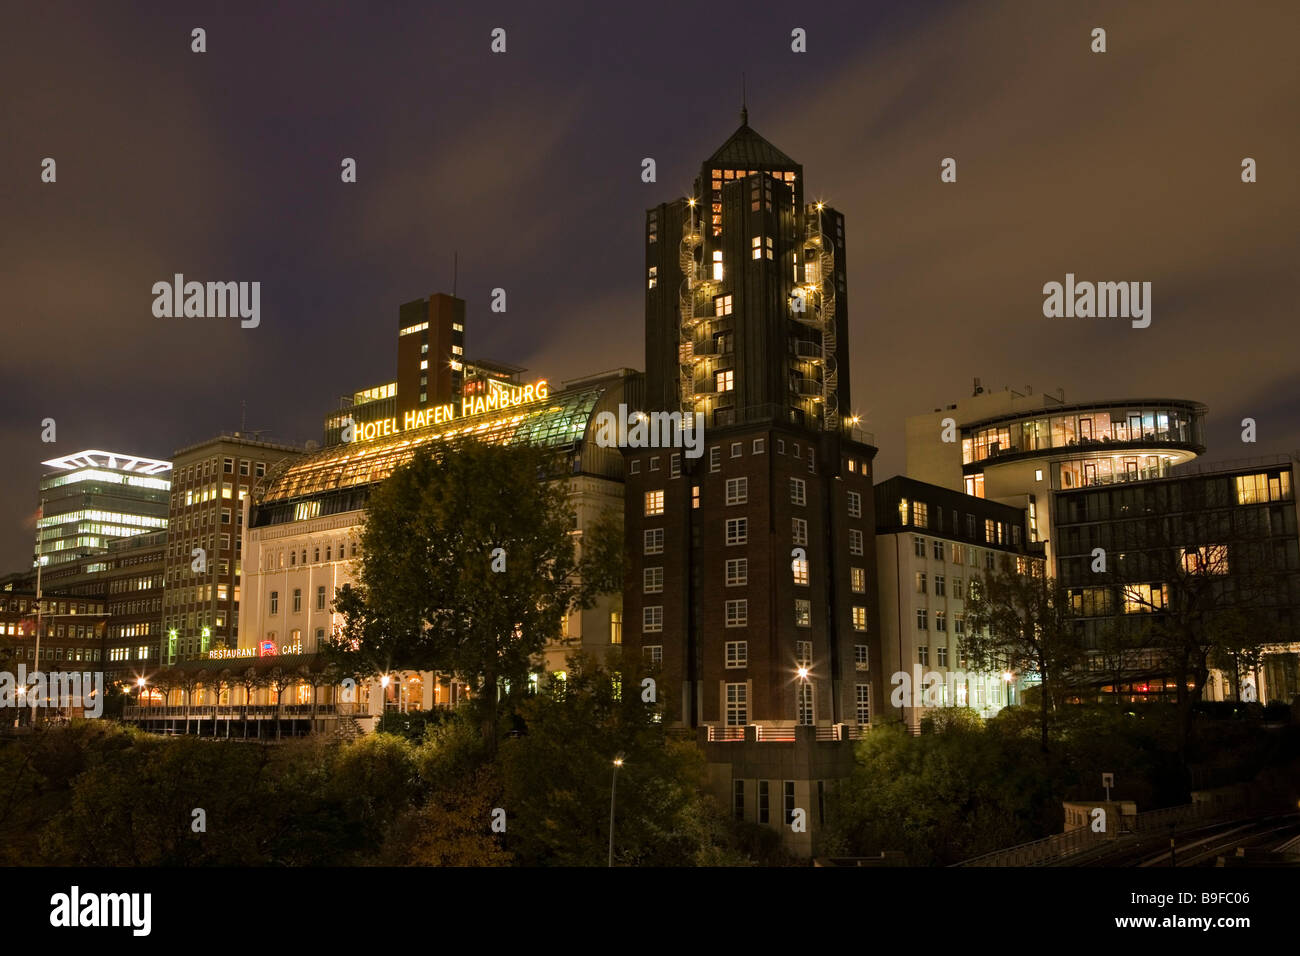 Hotel illuminata di notte, Hotel Hafen Hamburg, Astra Tower, Amburgo, Germania Foto Stock